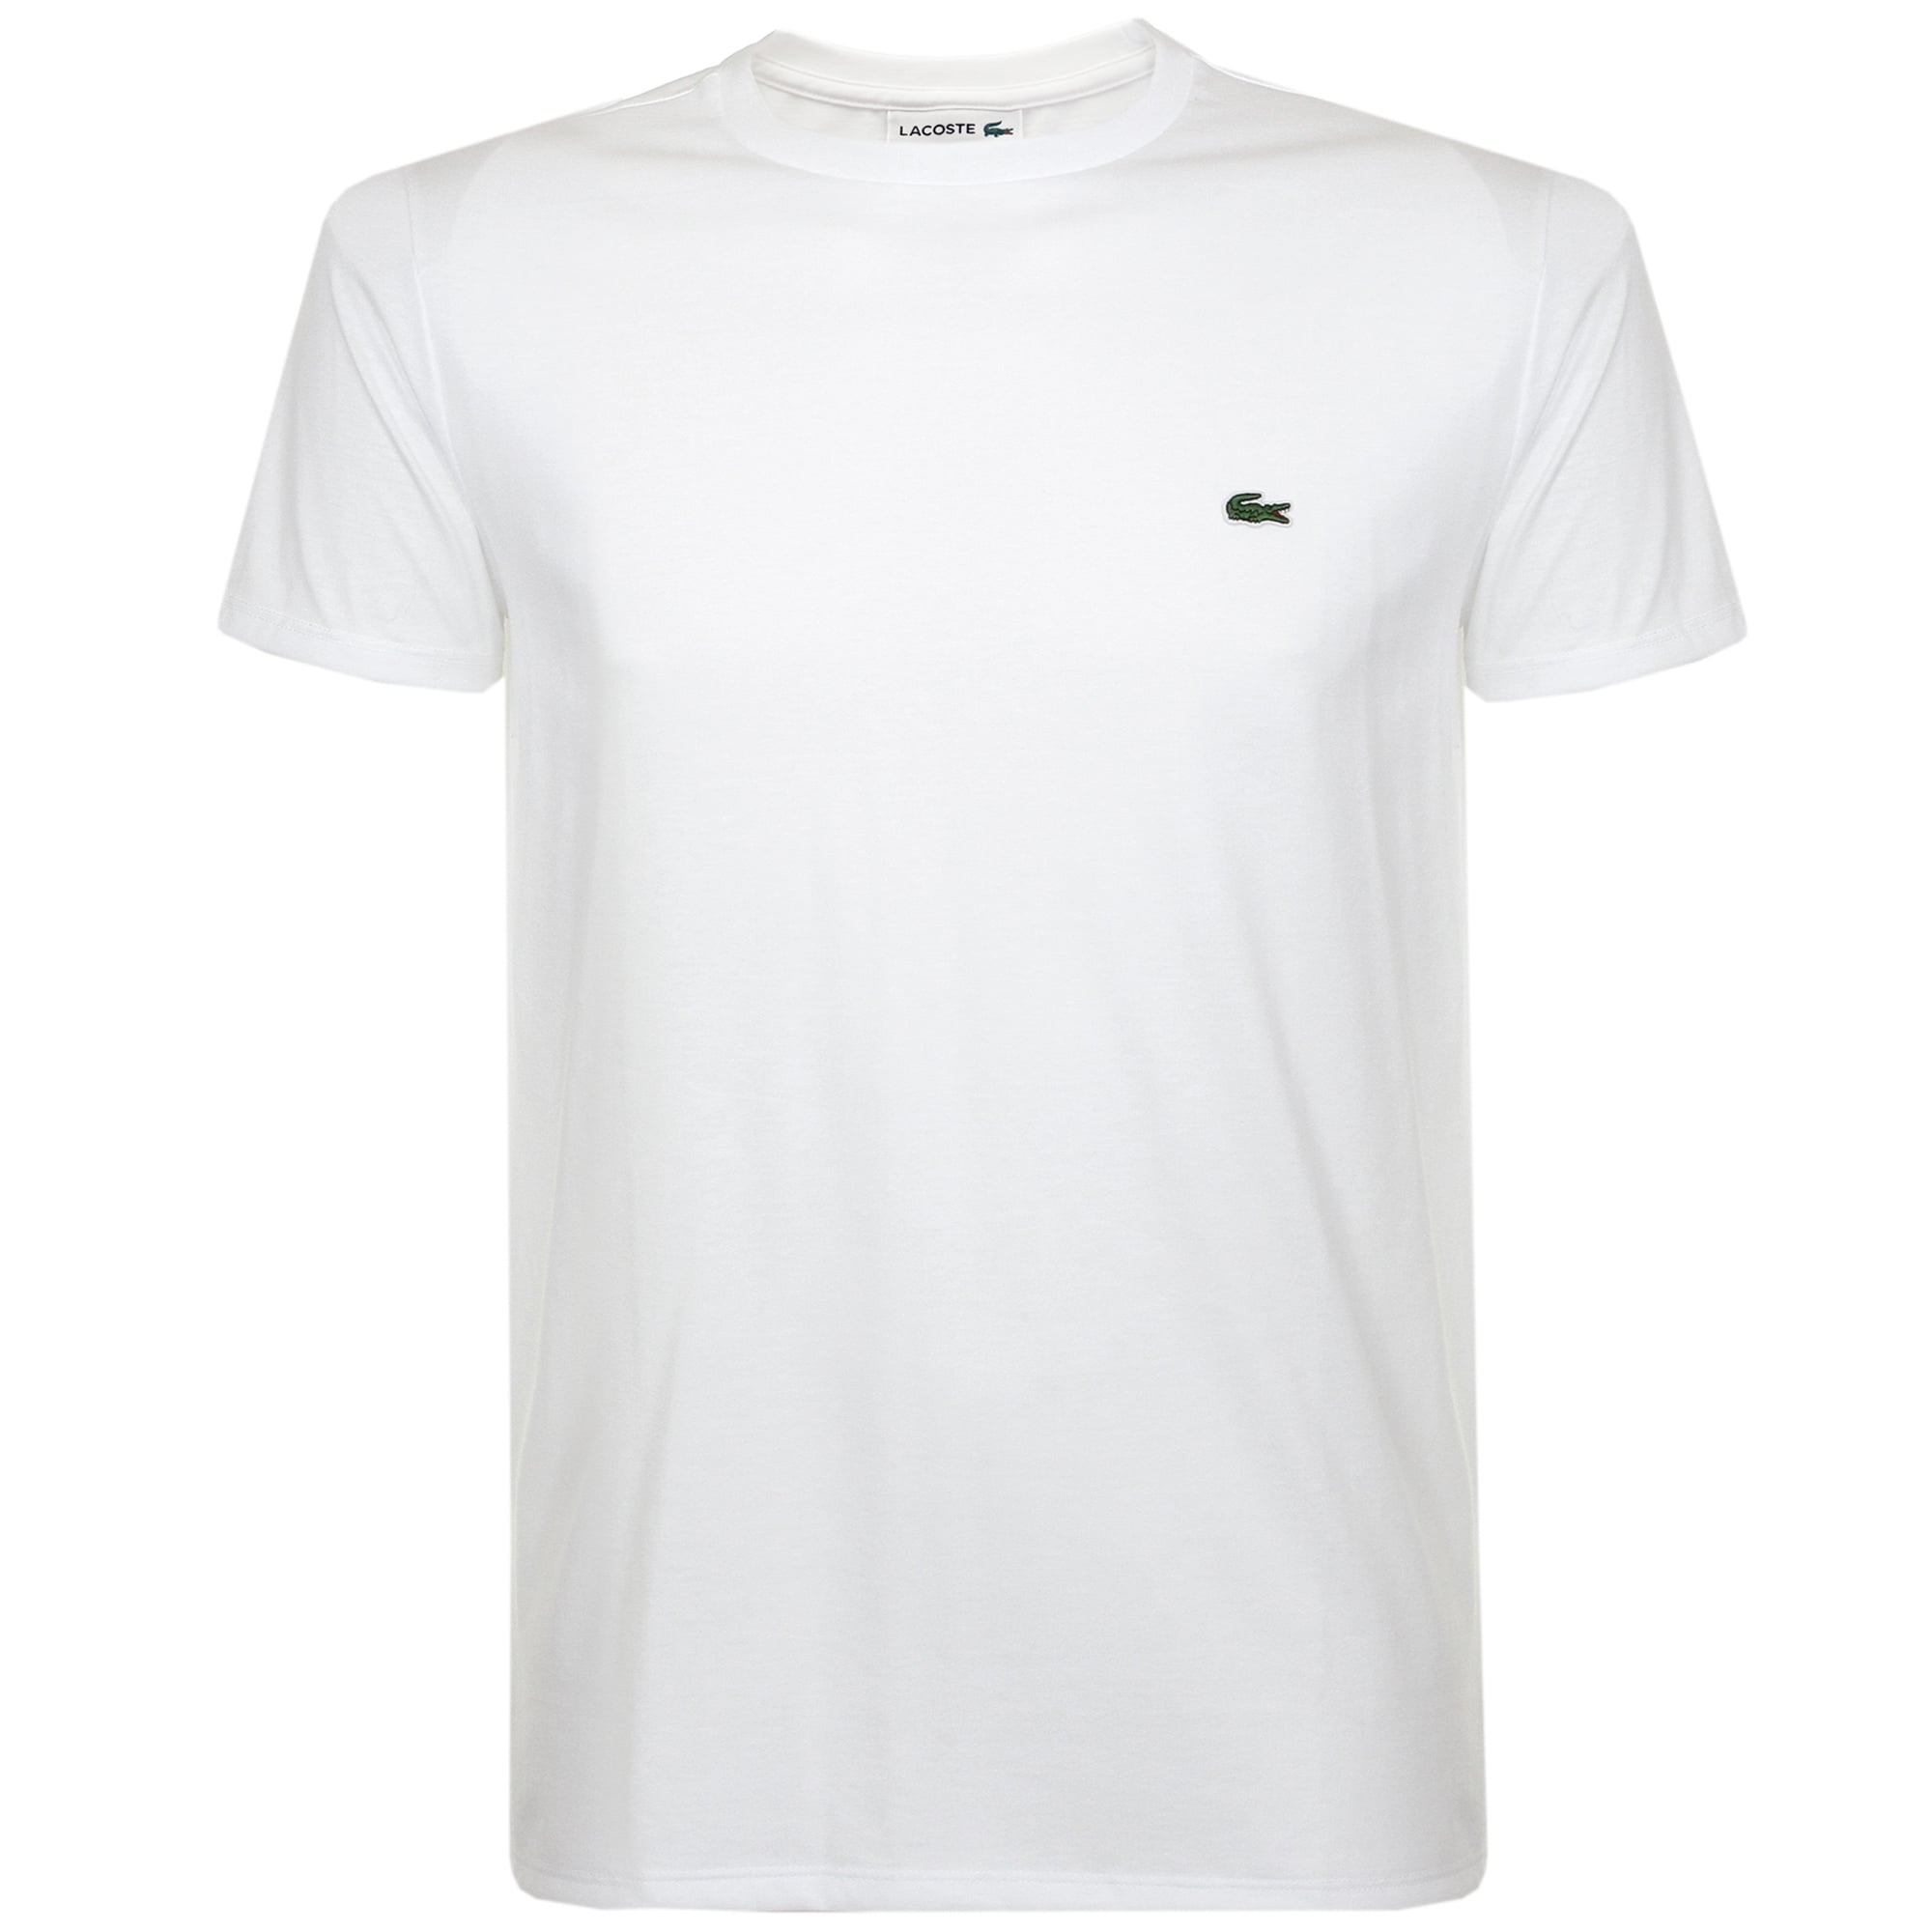 LACOSTE T-SHIRTS lacoste pima cotton white t-shirt th670900001 HCFPBFT